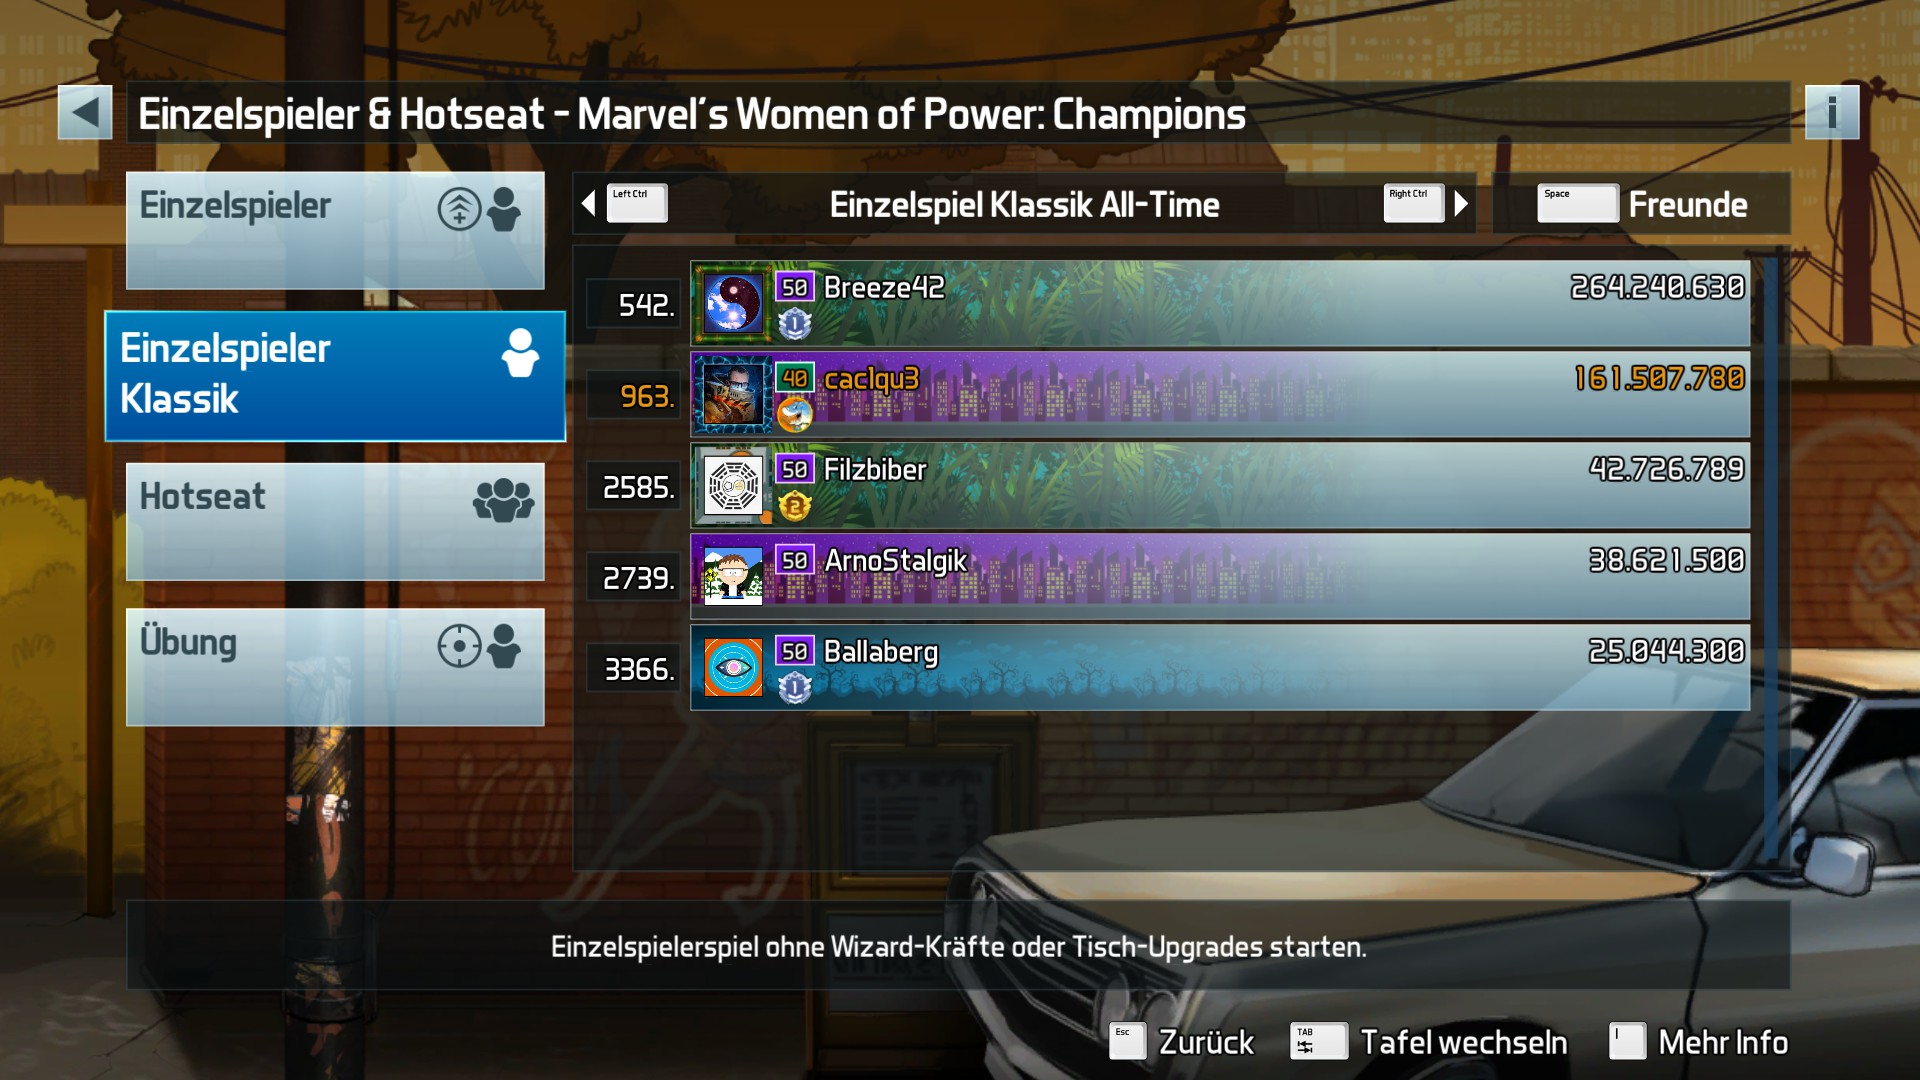 e2e4: Pinball FX3: Marvel’s Women of Power: Champions [Classic] (PC) 161,507,780 points on 2022-05-16 02:45:27